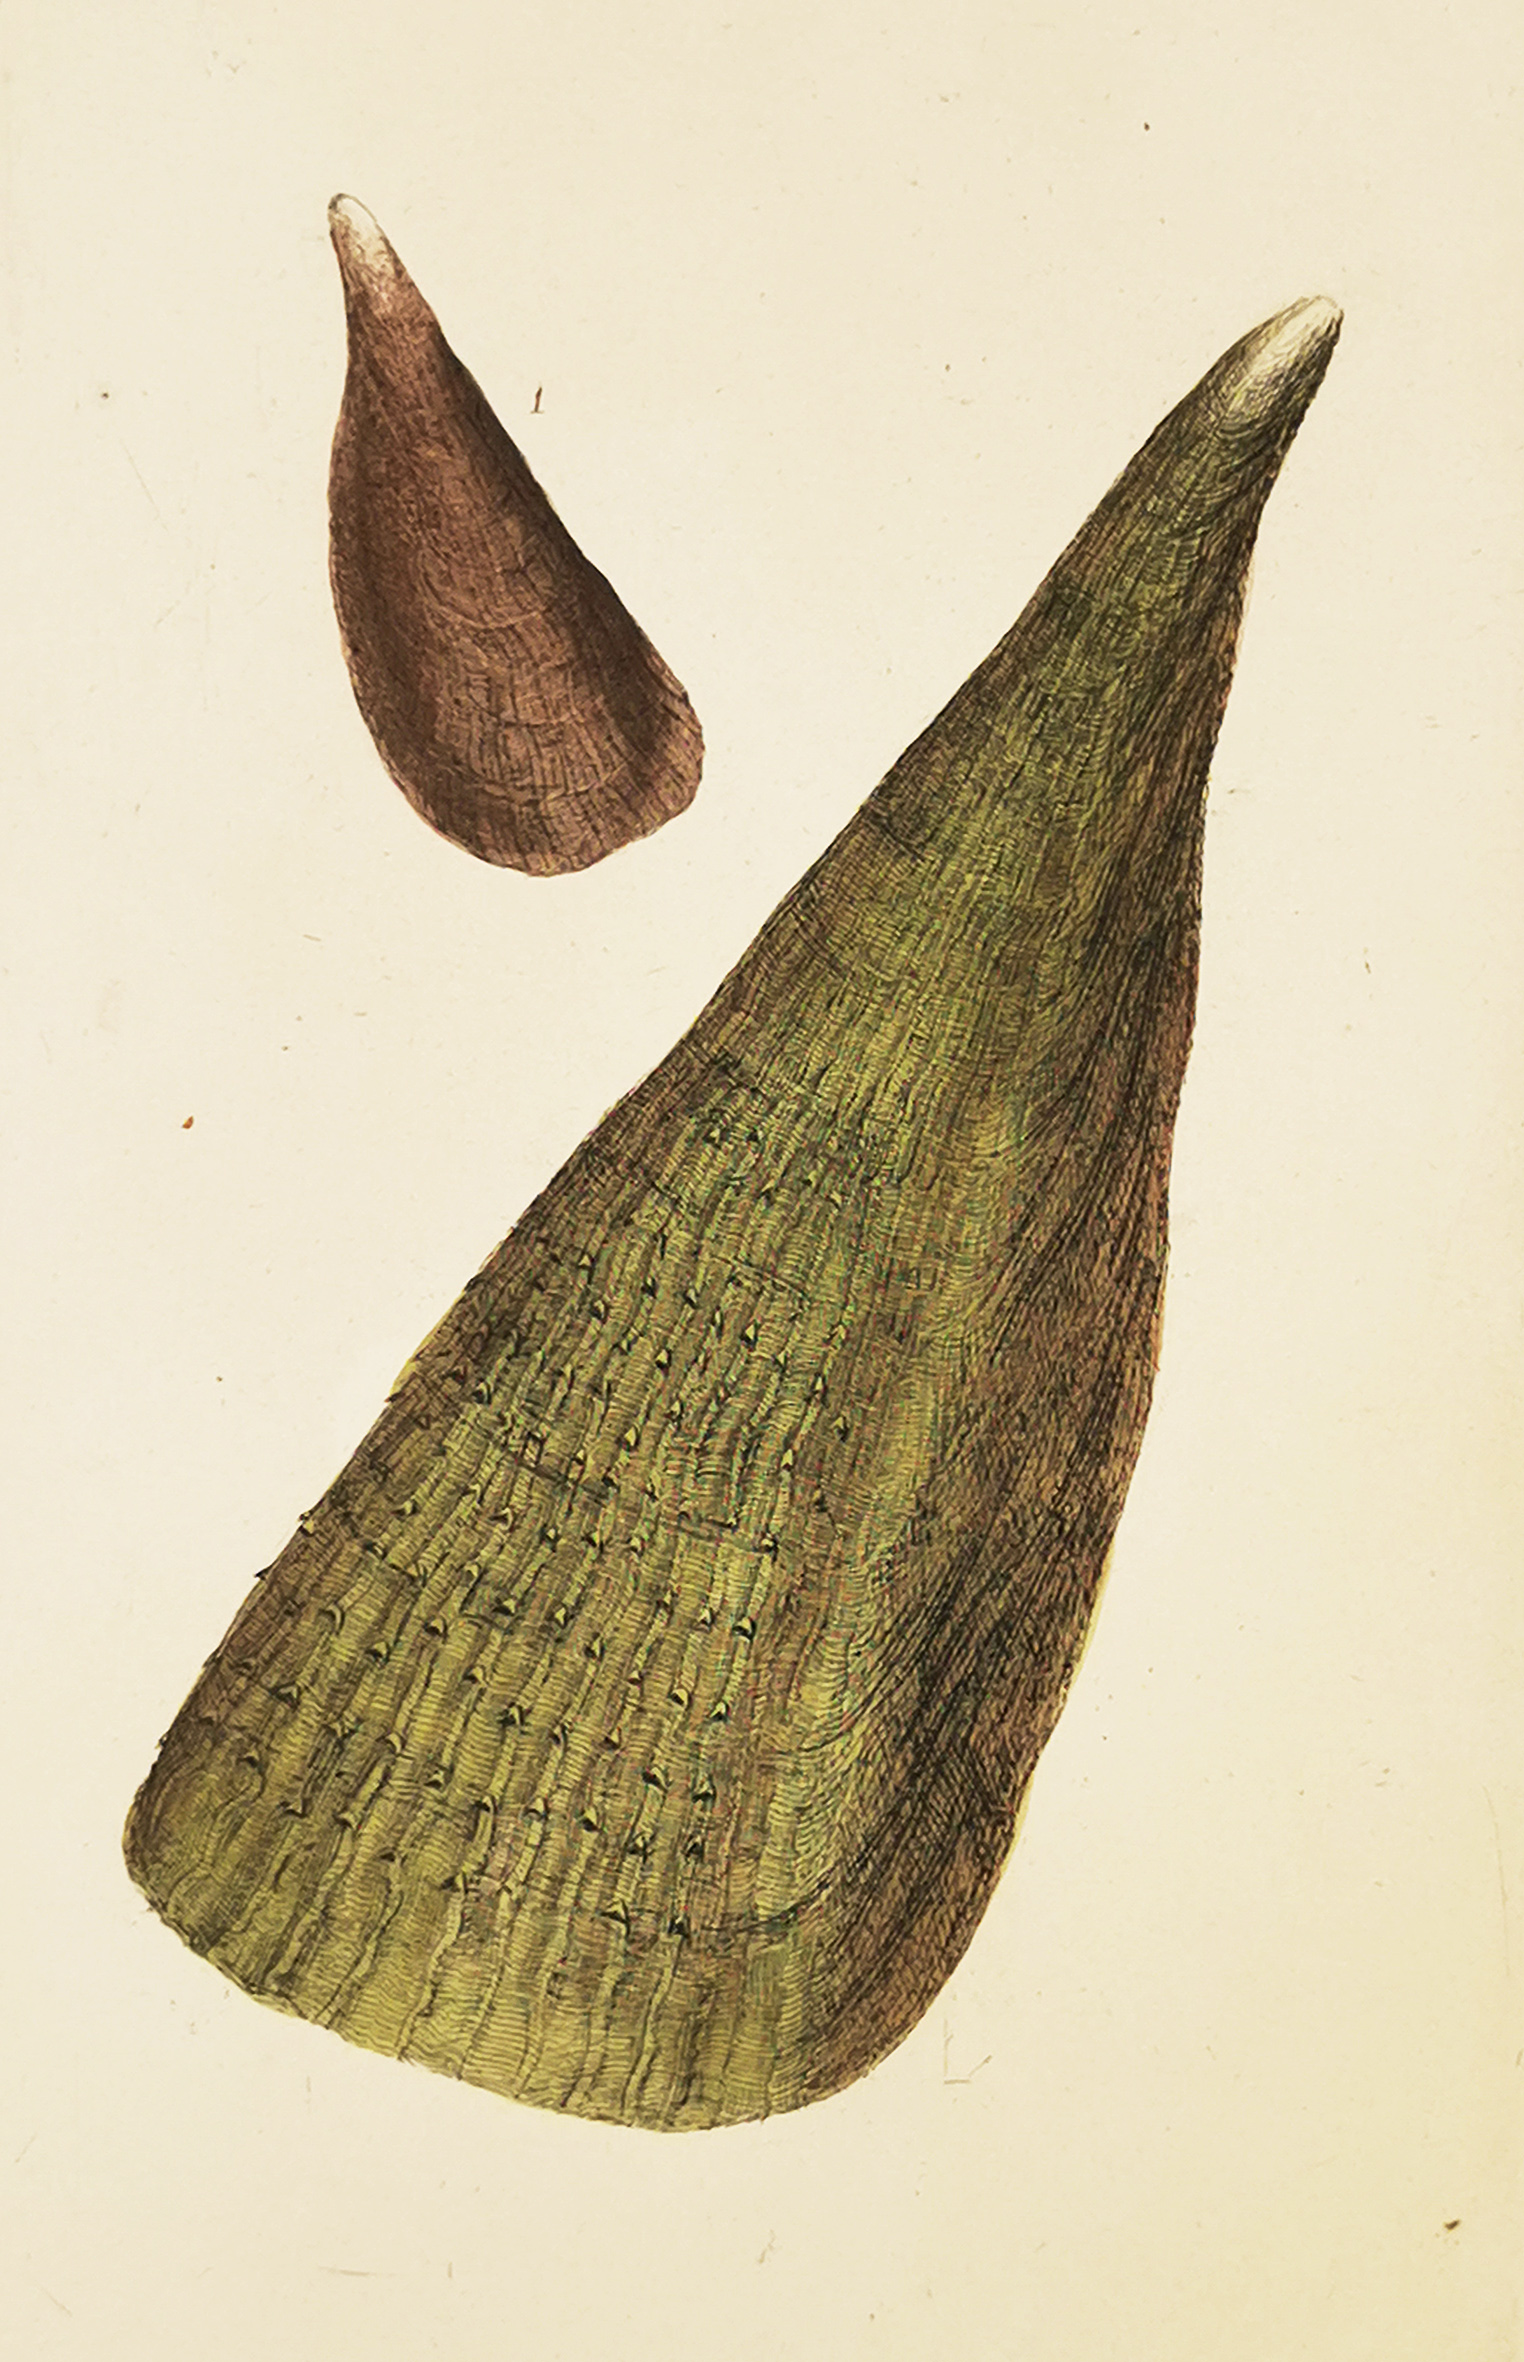 Thorny-wing, or Sea-ham. Pinna pectinata. - Antique Print from 1790